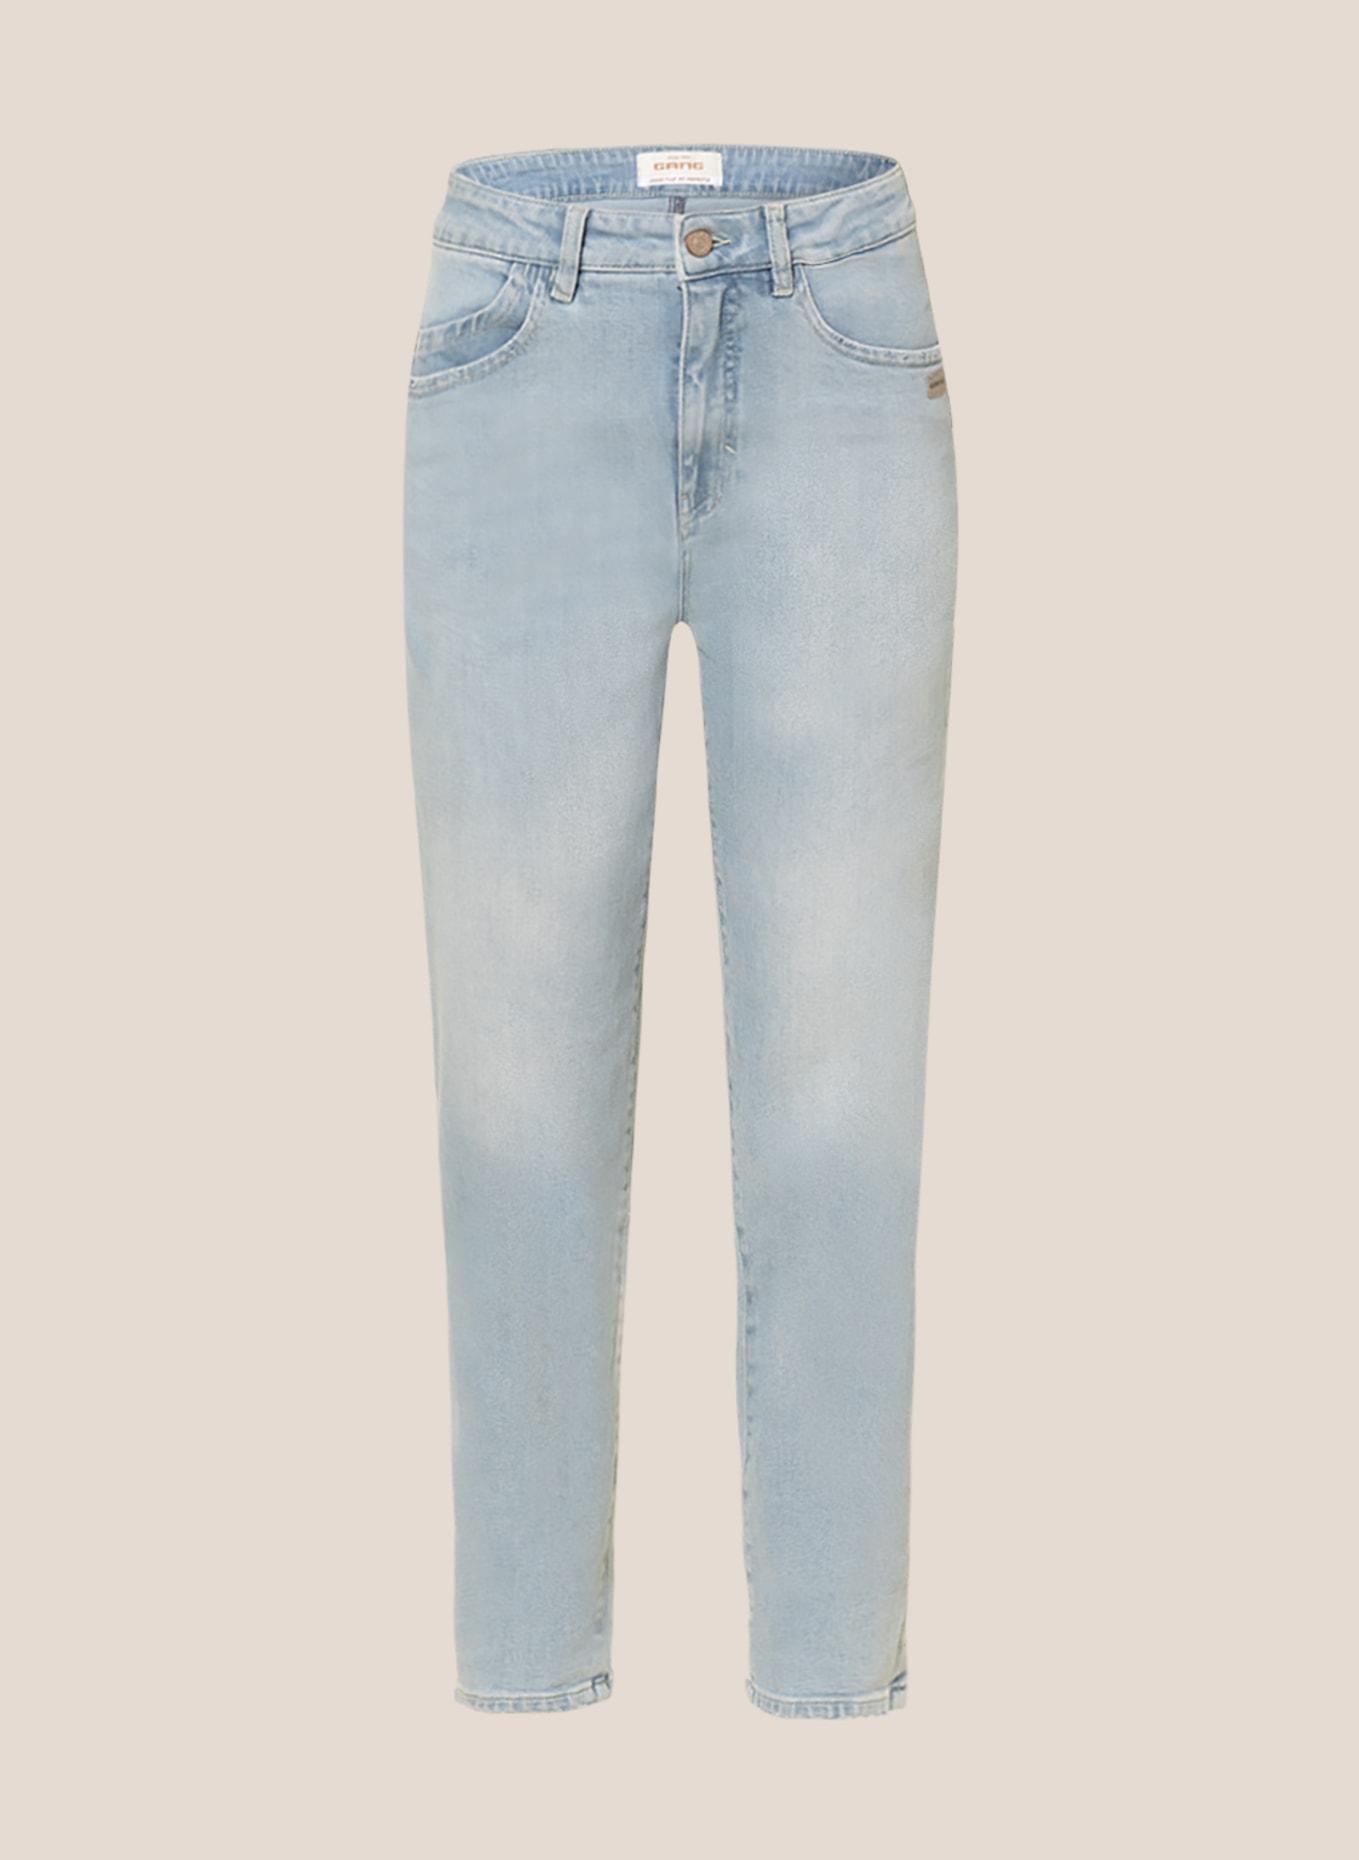 GANG 7/8-Jeans TILDA, Farbe: 7650 light baby blue (Bild 1)